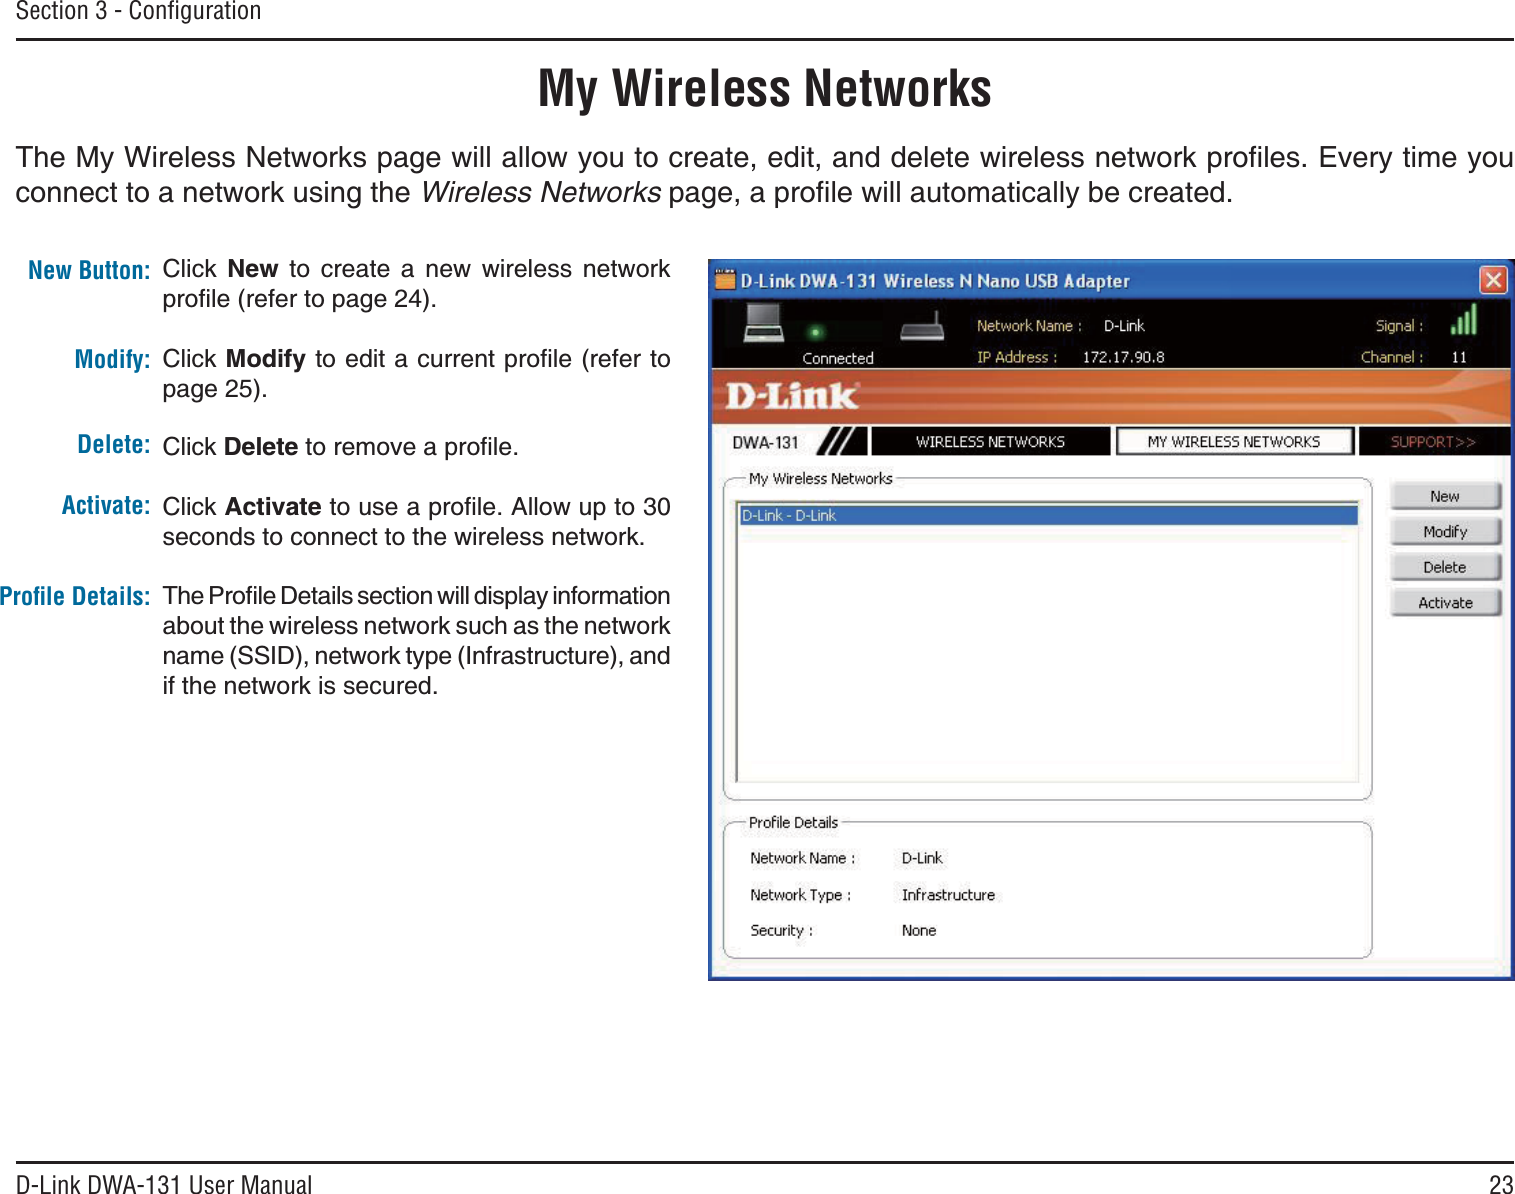 23D-Link DWA-131 User ManualSection 3 - ConﬁgurationMy Wireless Networks6JG/[9KTGNGUU0GVYQTMURCIGYKNNCNNQY[QWVQETGCVGGFKVCPFFGNGVGYKTGNGUUPGVYQTMRTQſNGU&apos;XGT[VKOG[QWconnect to a network using the Wireless NetworksRCIGCRTQſNGYKNNCWVQOCVKECNN[DGETGCVGFNew Button:Modify:Click New to create a new wireless network RTQſNGTGHGTVQRCIGClick /QFKH[VQGFKVCEWTTGPVRTQſNGTGHGTVQpage 25).Click DeleteVQTGOQXGCRTQſNGClick ActivateVQWUGCRTQſNG#NNQYWRVQseconds to connect to the wireless network.6JG2TQſNG&amp;GVCKNUUGEVKQPYKNNFKURNC[KPHQTOCVKQPabout the wireless network such as the network name (SSID), network type (Infrastructure), and if the network is secured.Delete:Activate:Proﬁle Details: